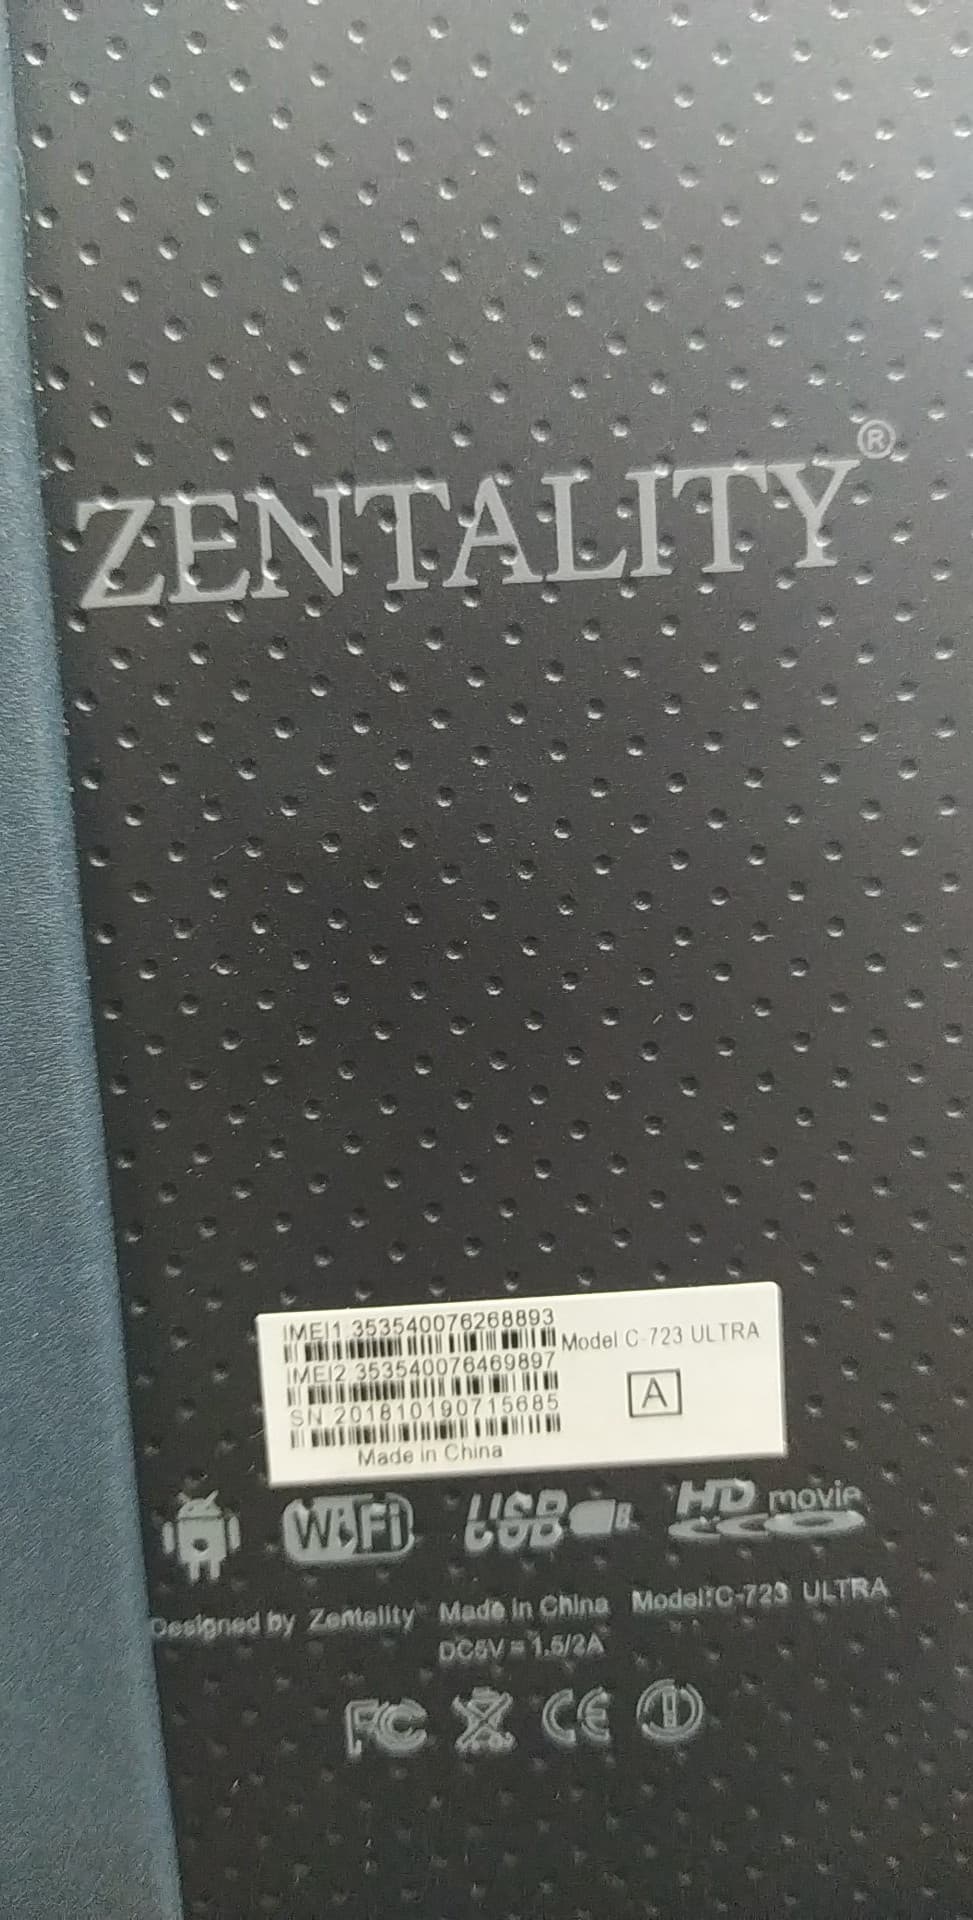 zentality c-723 ultra